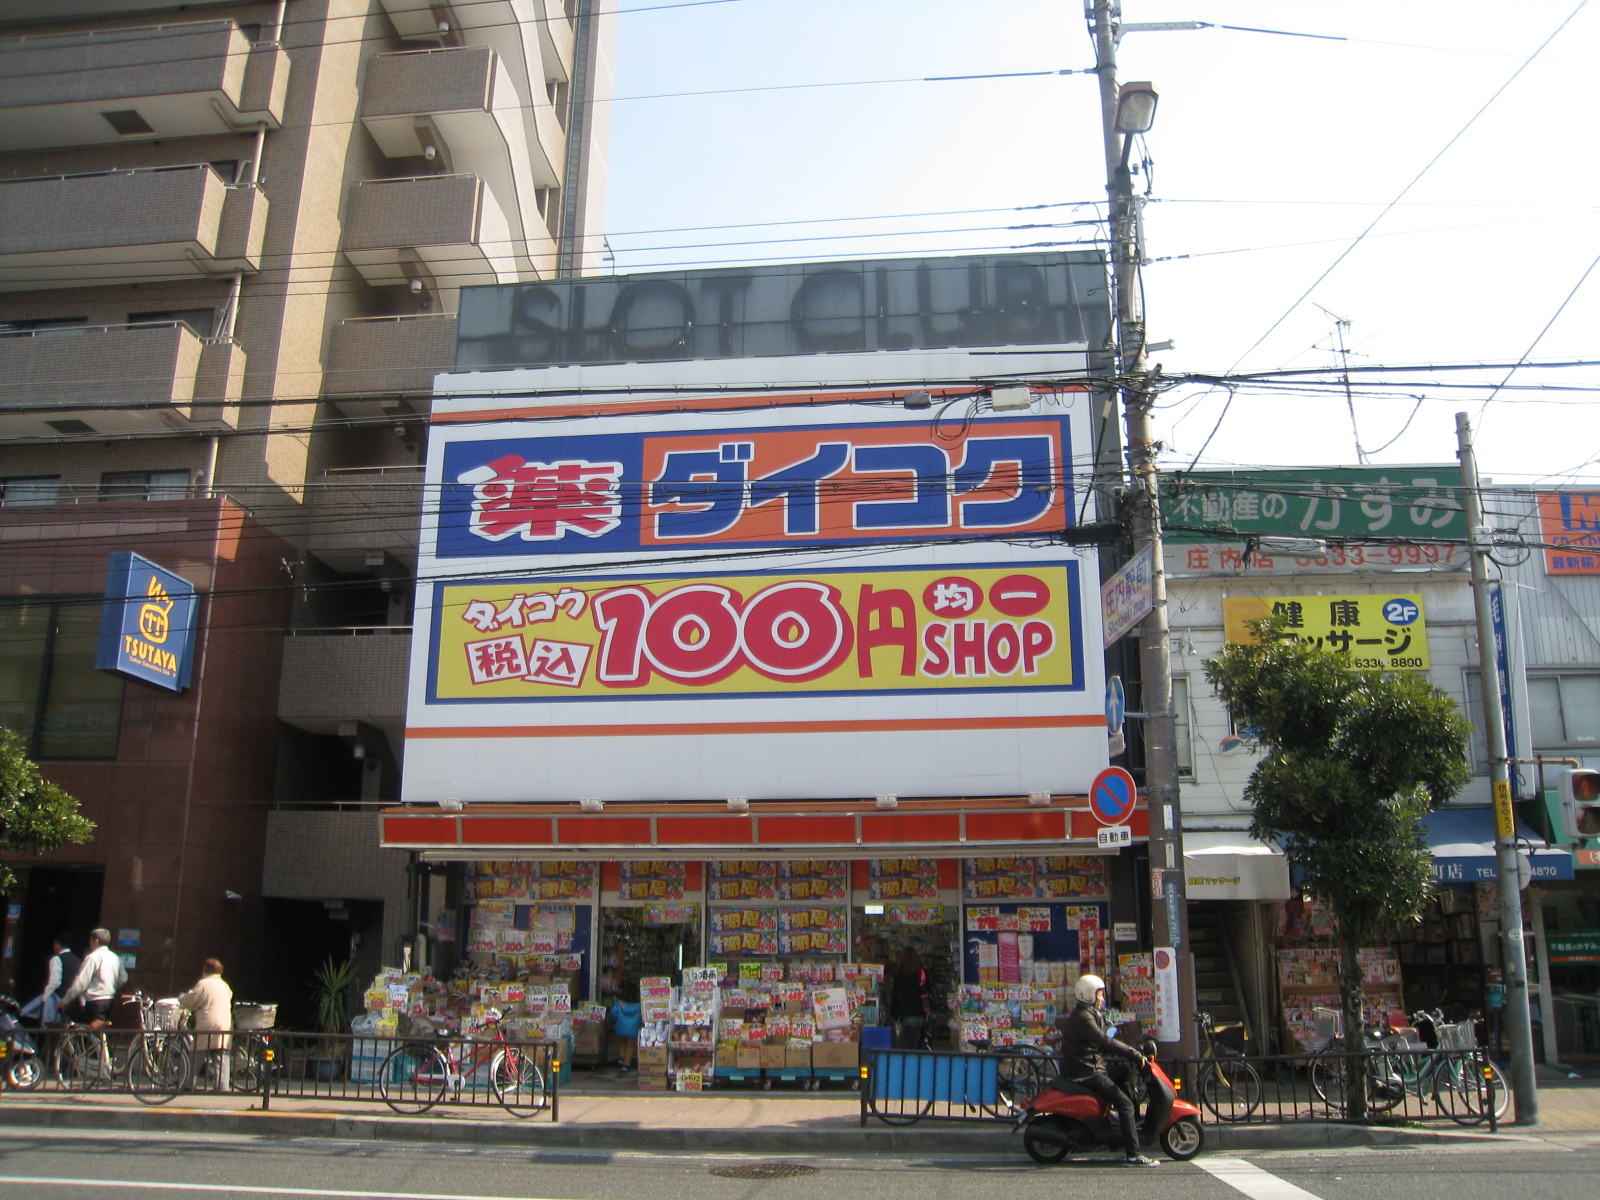 Dorakkusutoa. Daikoku drag Shonai Station shop 688m until (drugstore)